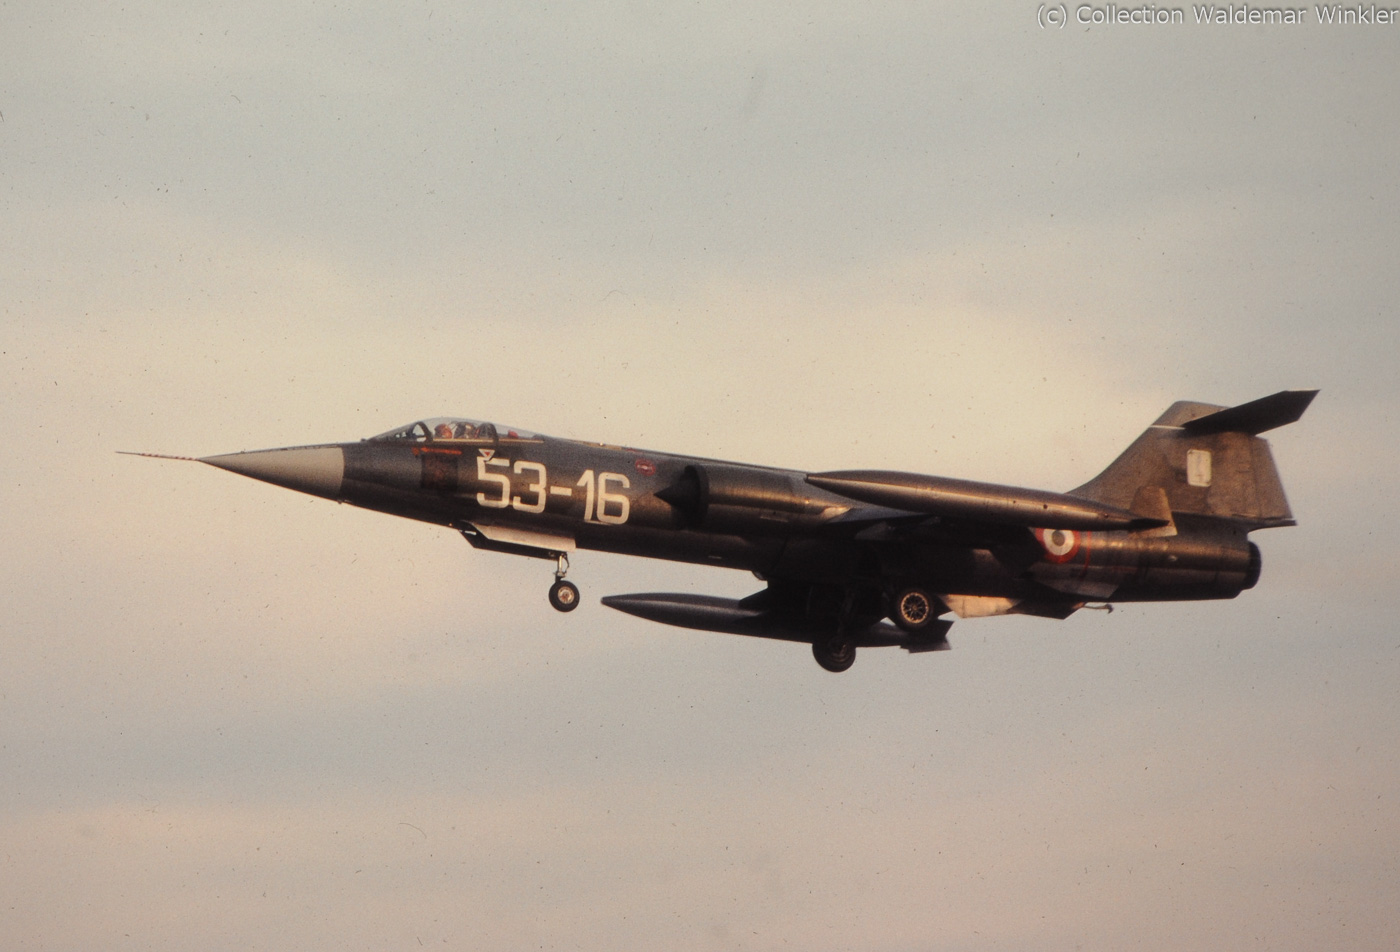 F-104_S__Starfighter_DSC_1486.jpg